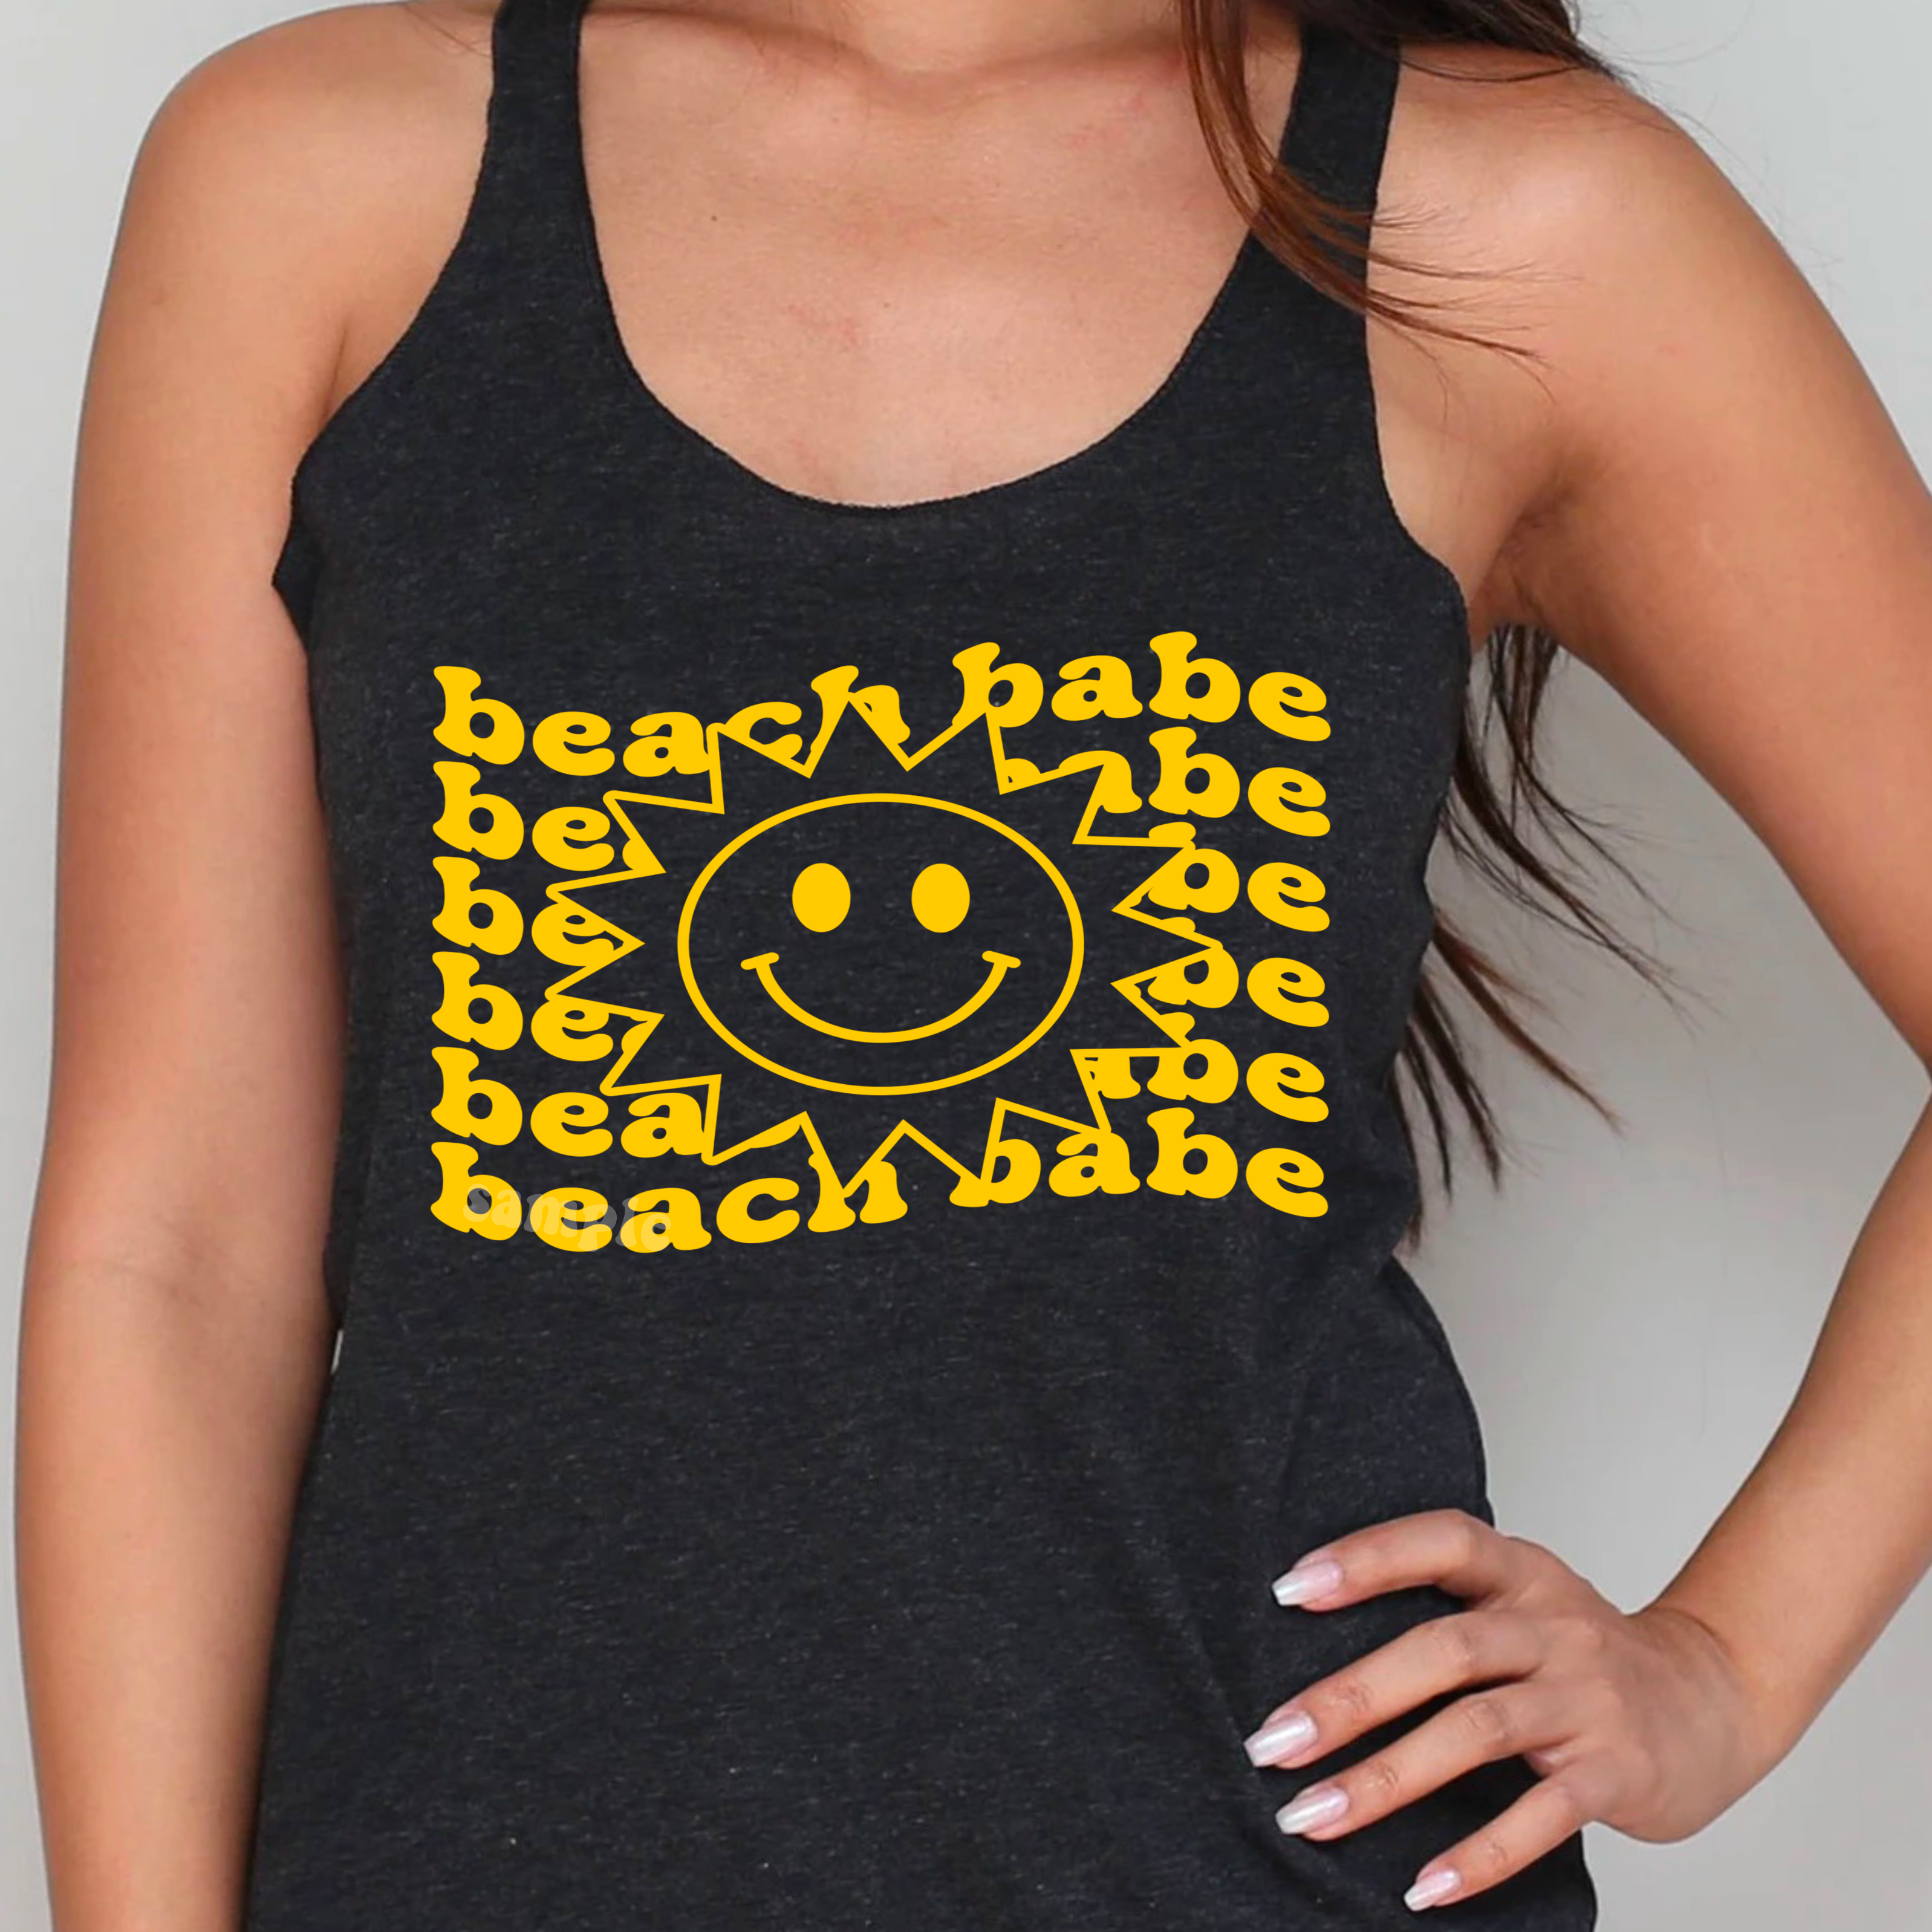 Beach Babe  Screen Print Transfer